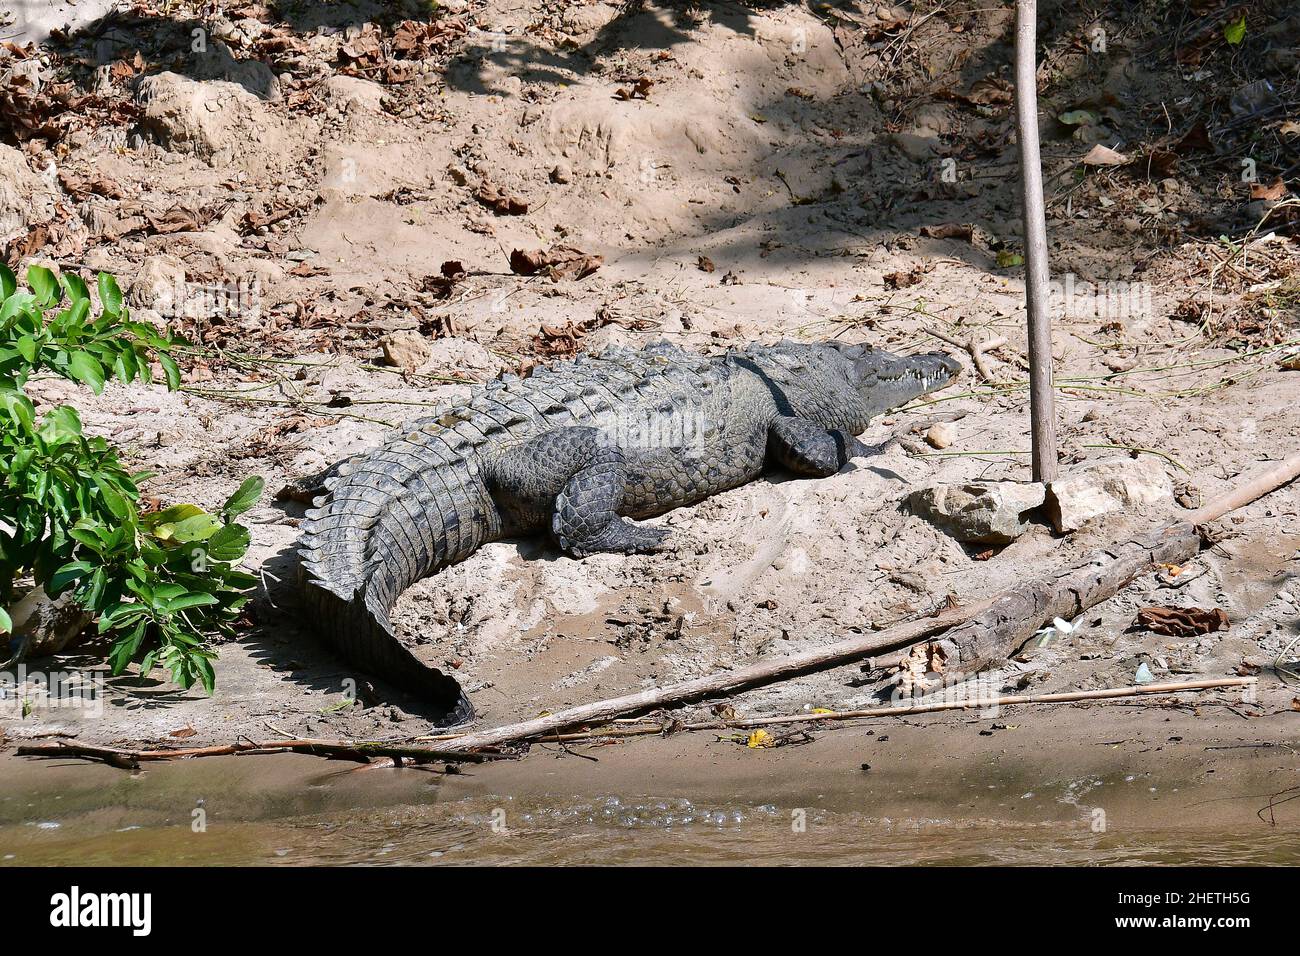 American crocodile, Spitzkrokodil, Crocodylus acutus, amerikai krokodil, Sumidero Canyon National Park, state of Chiapas, Mexico, North America Stock Photo